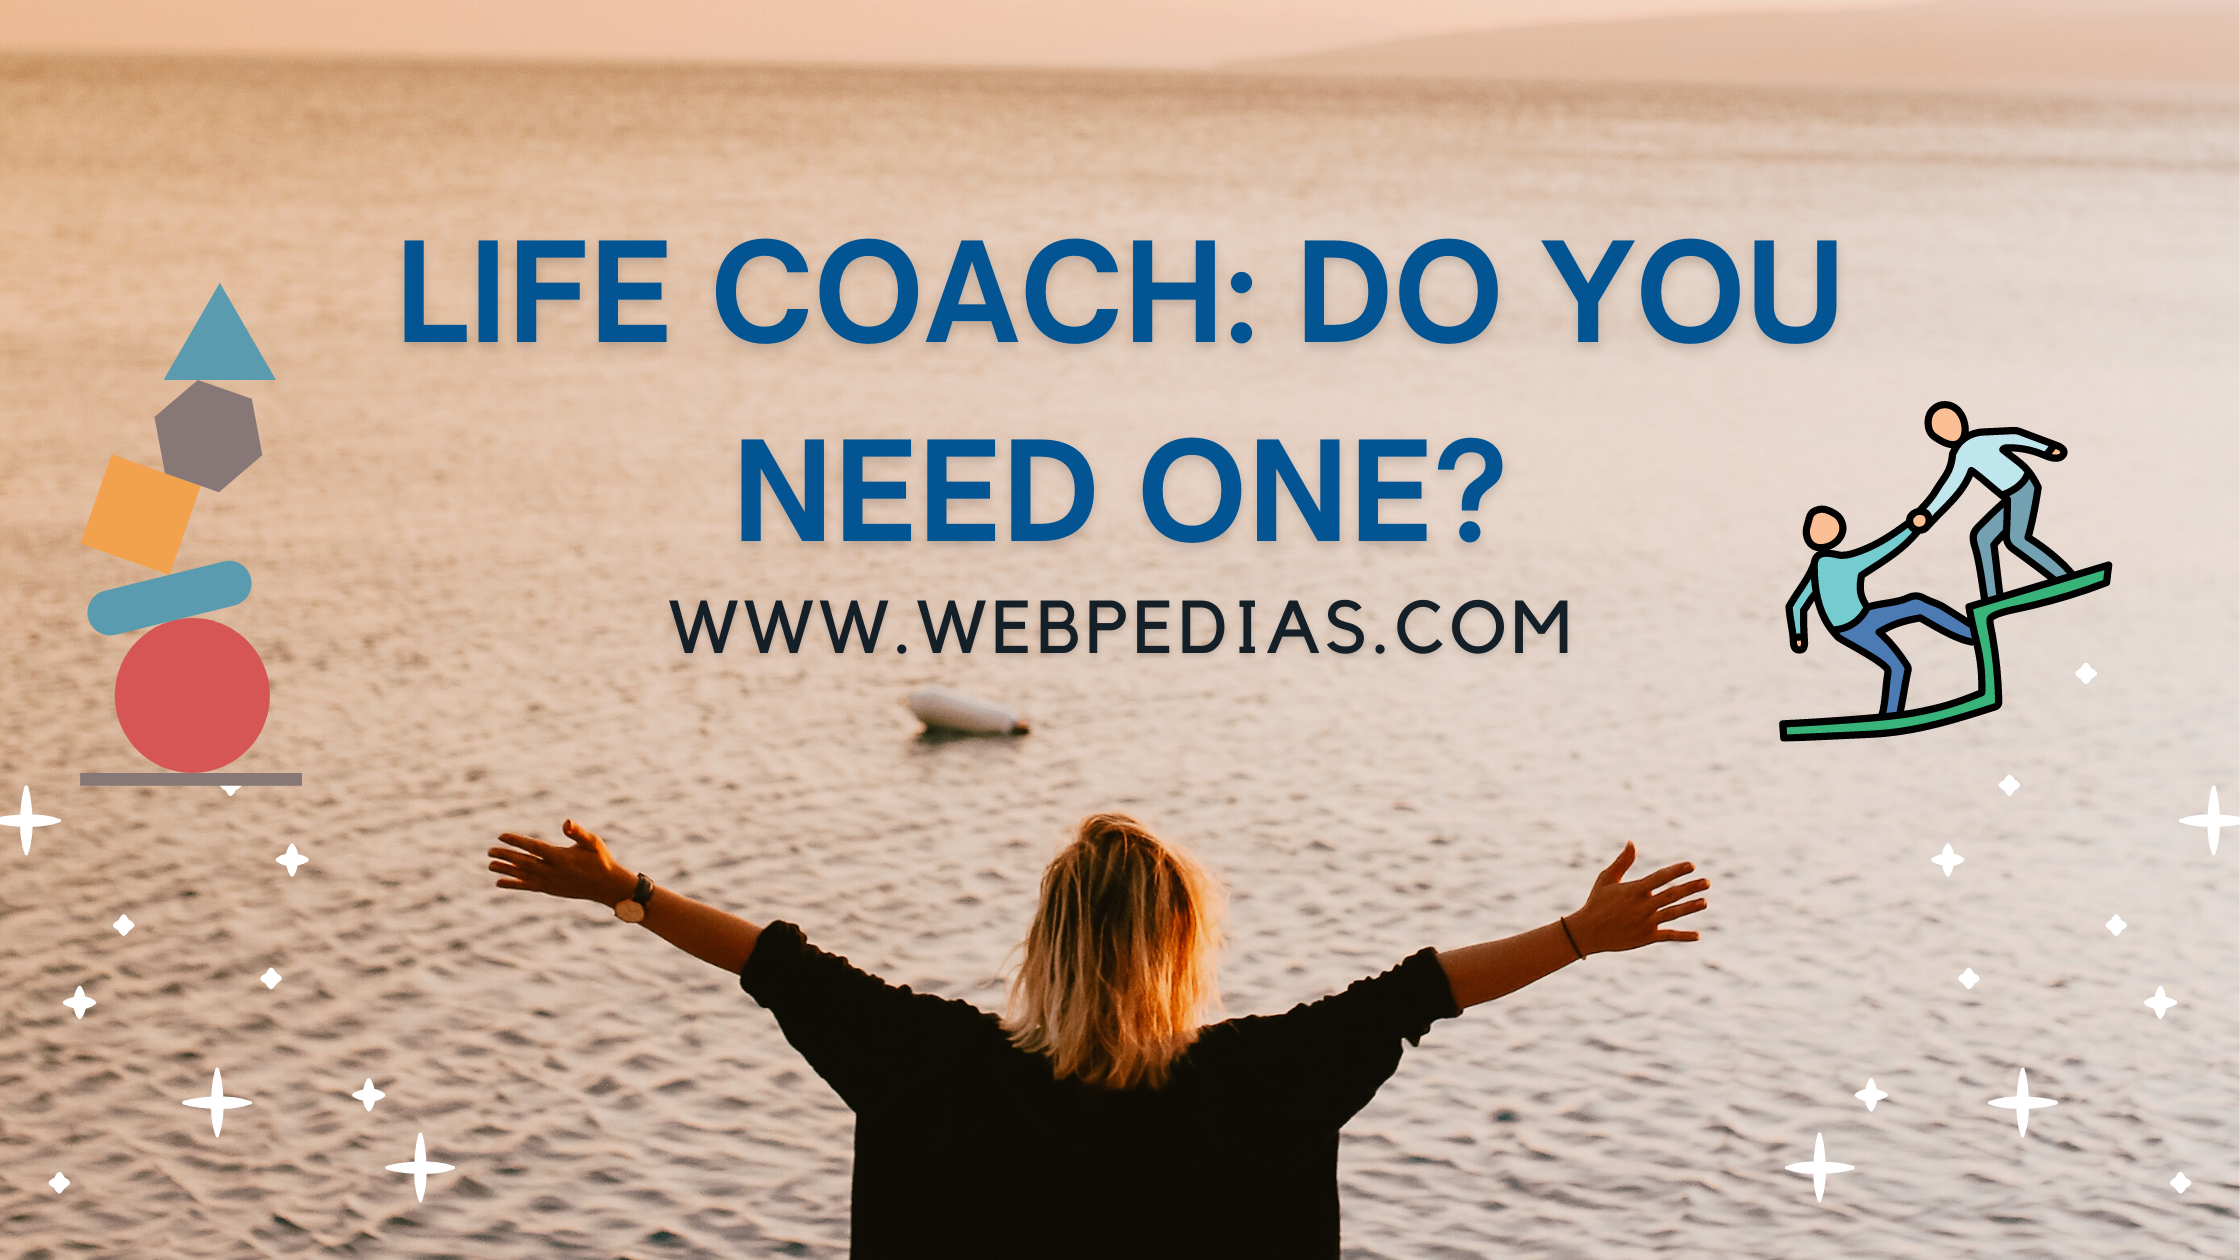 Life Coach: Do You Need One?